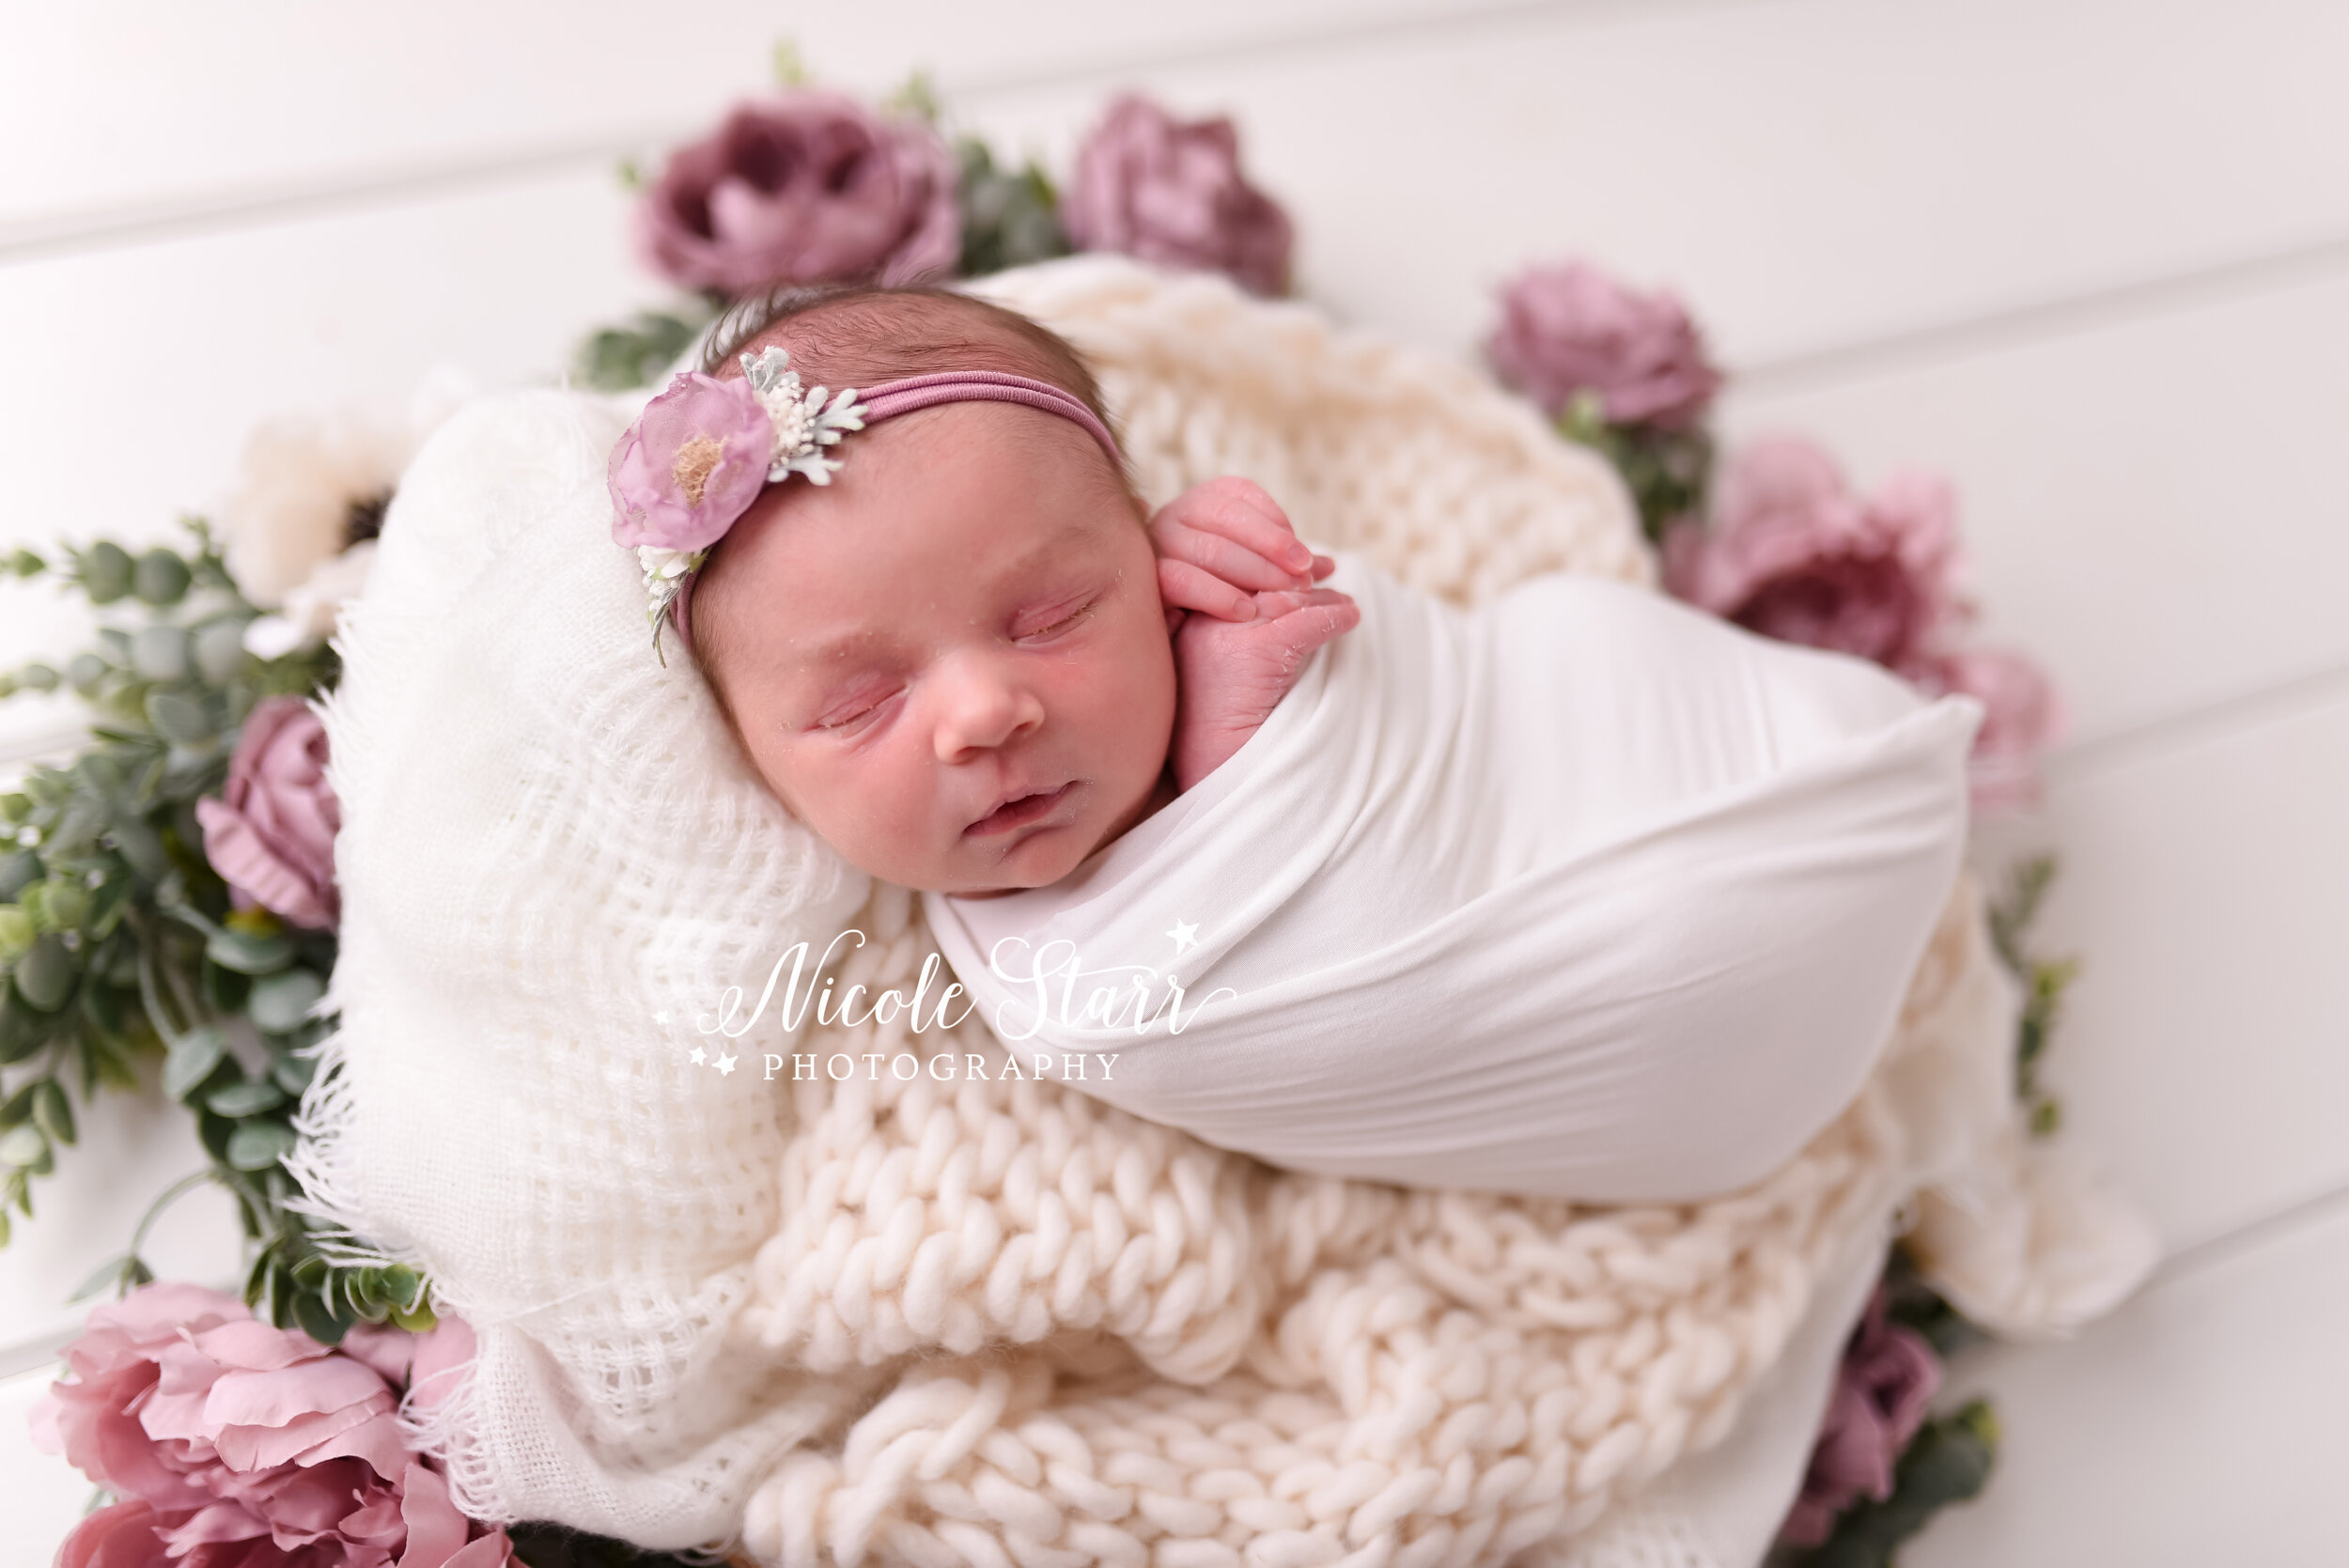 Size Newborn Baby to Adult Headbands Felt Flower Crowns Set Big & Little Sister Red Tones